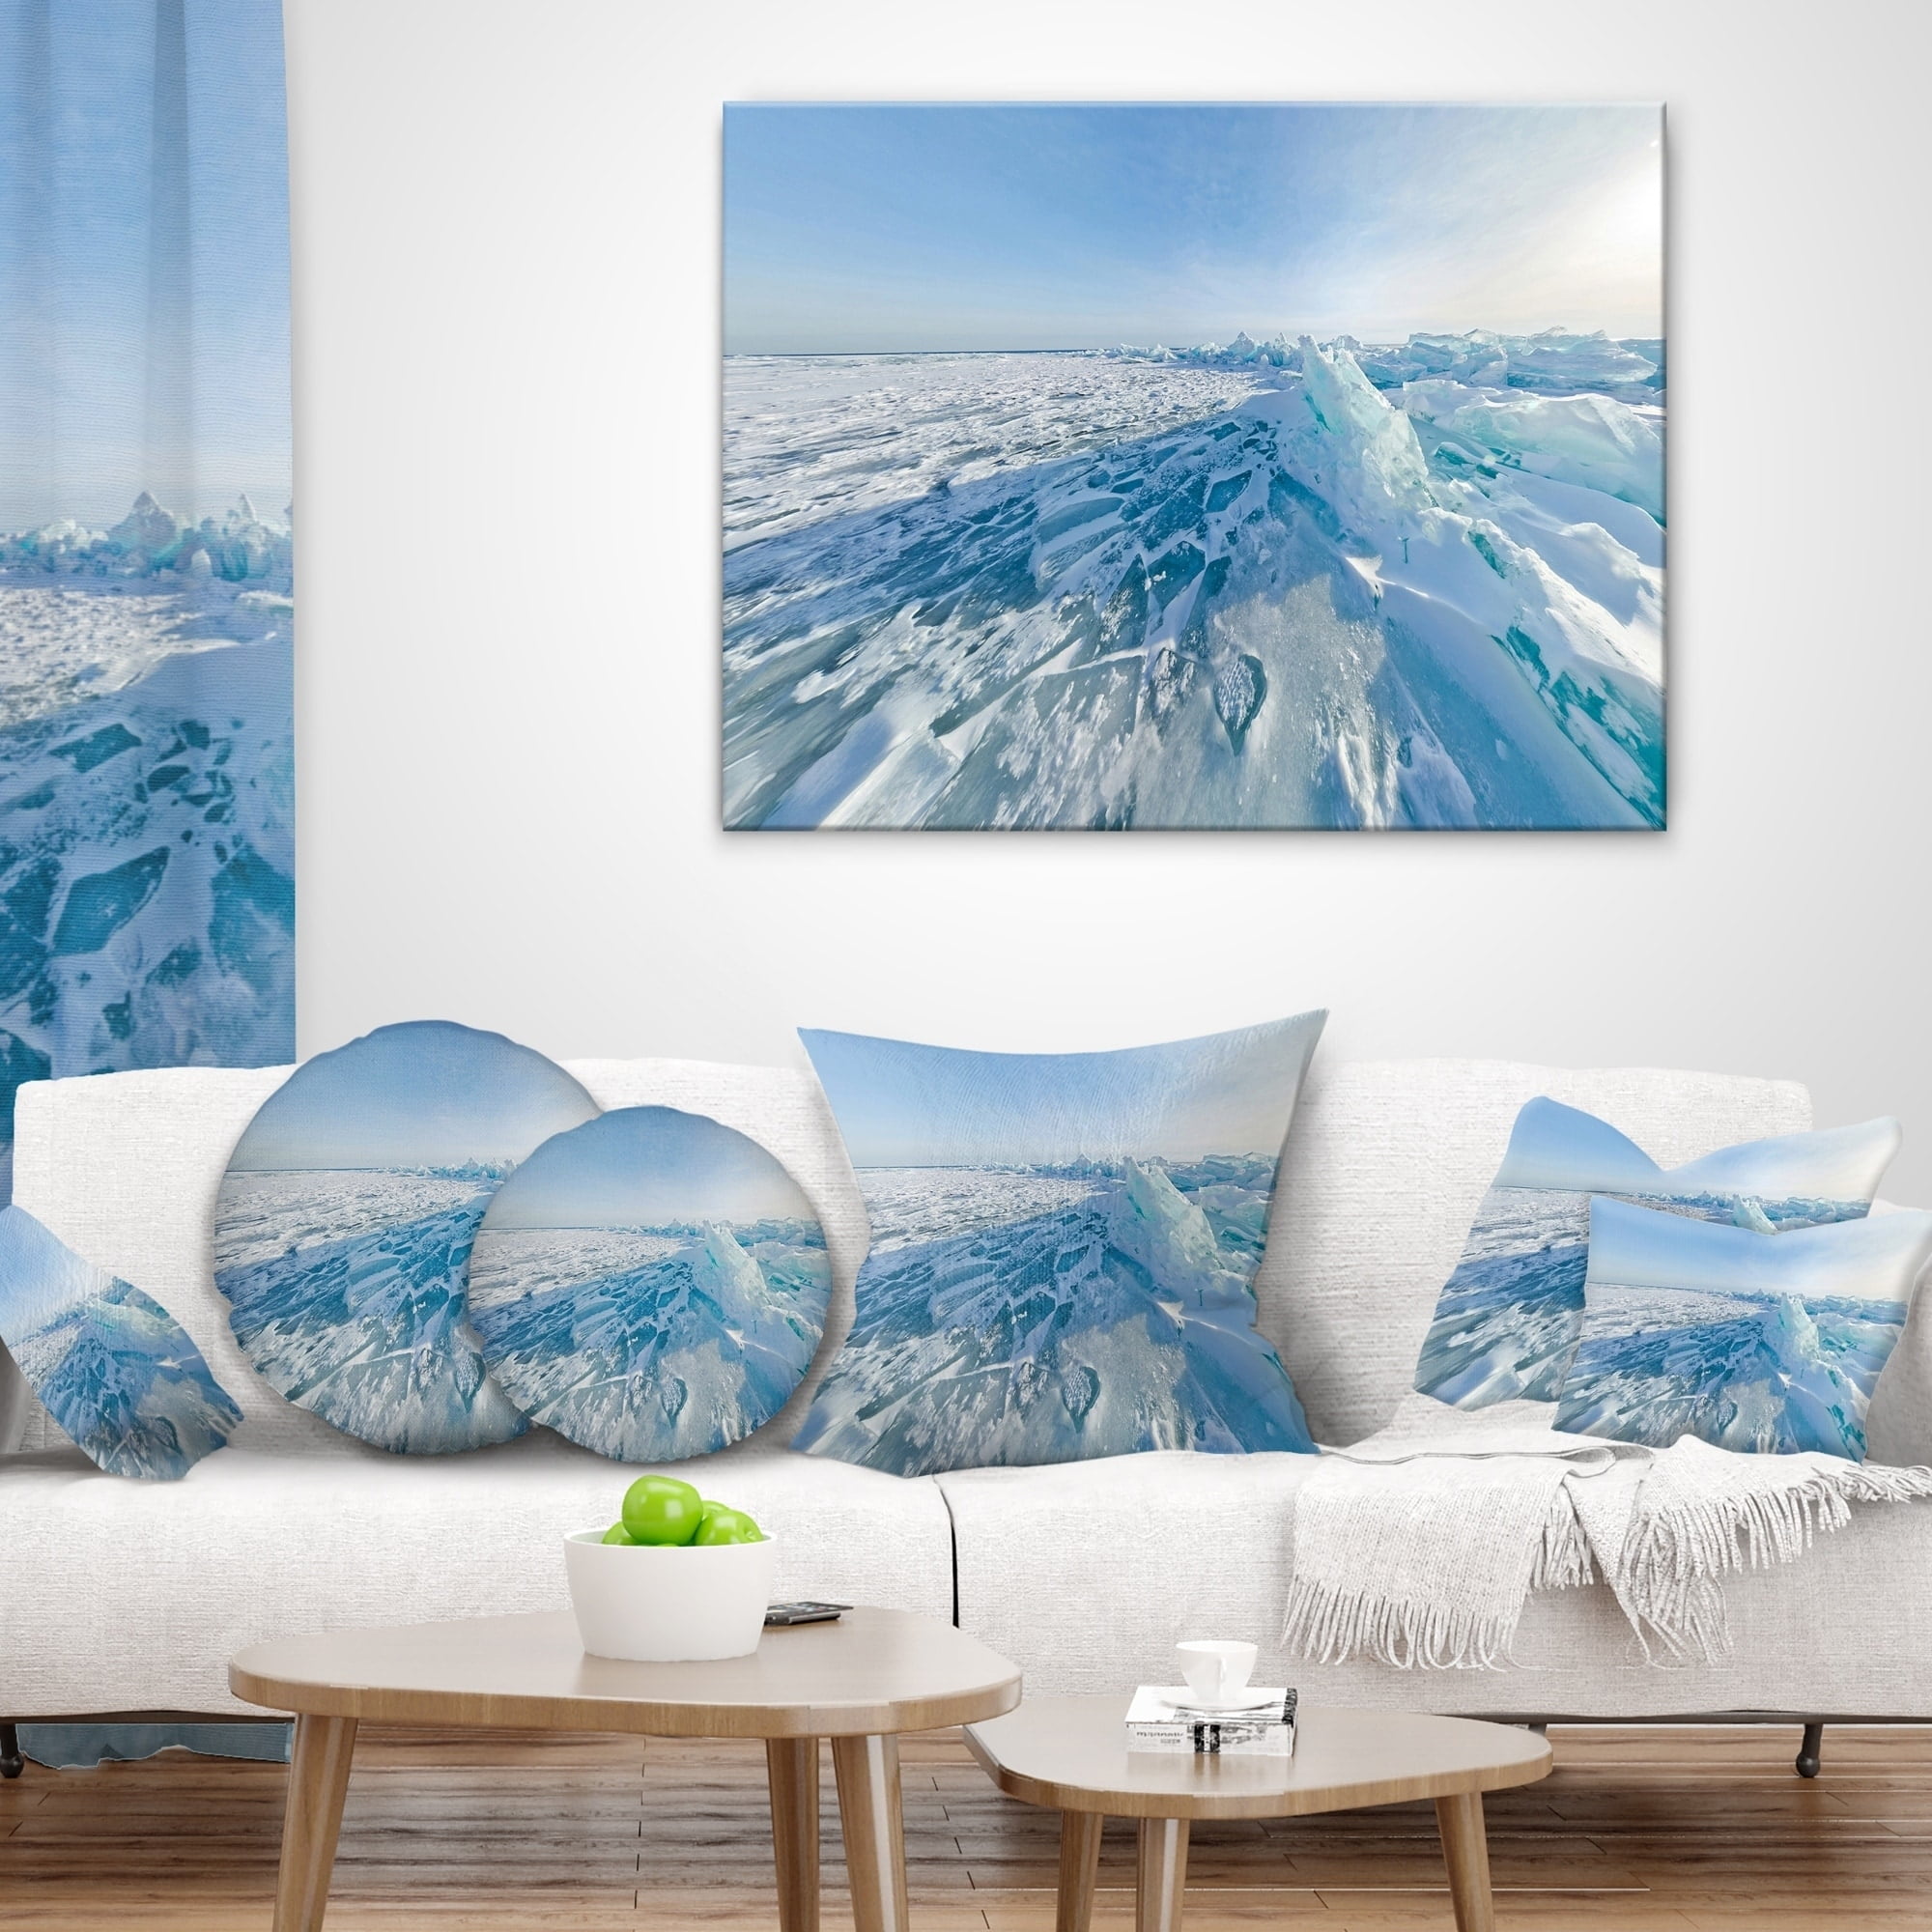 Designart CU11736-16-16 Ice Hummocks in Lake Baikal Siberia Landscape Printed Cushion Cover for Living Room Sofa 16 x 16, Throw Pillow 